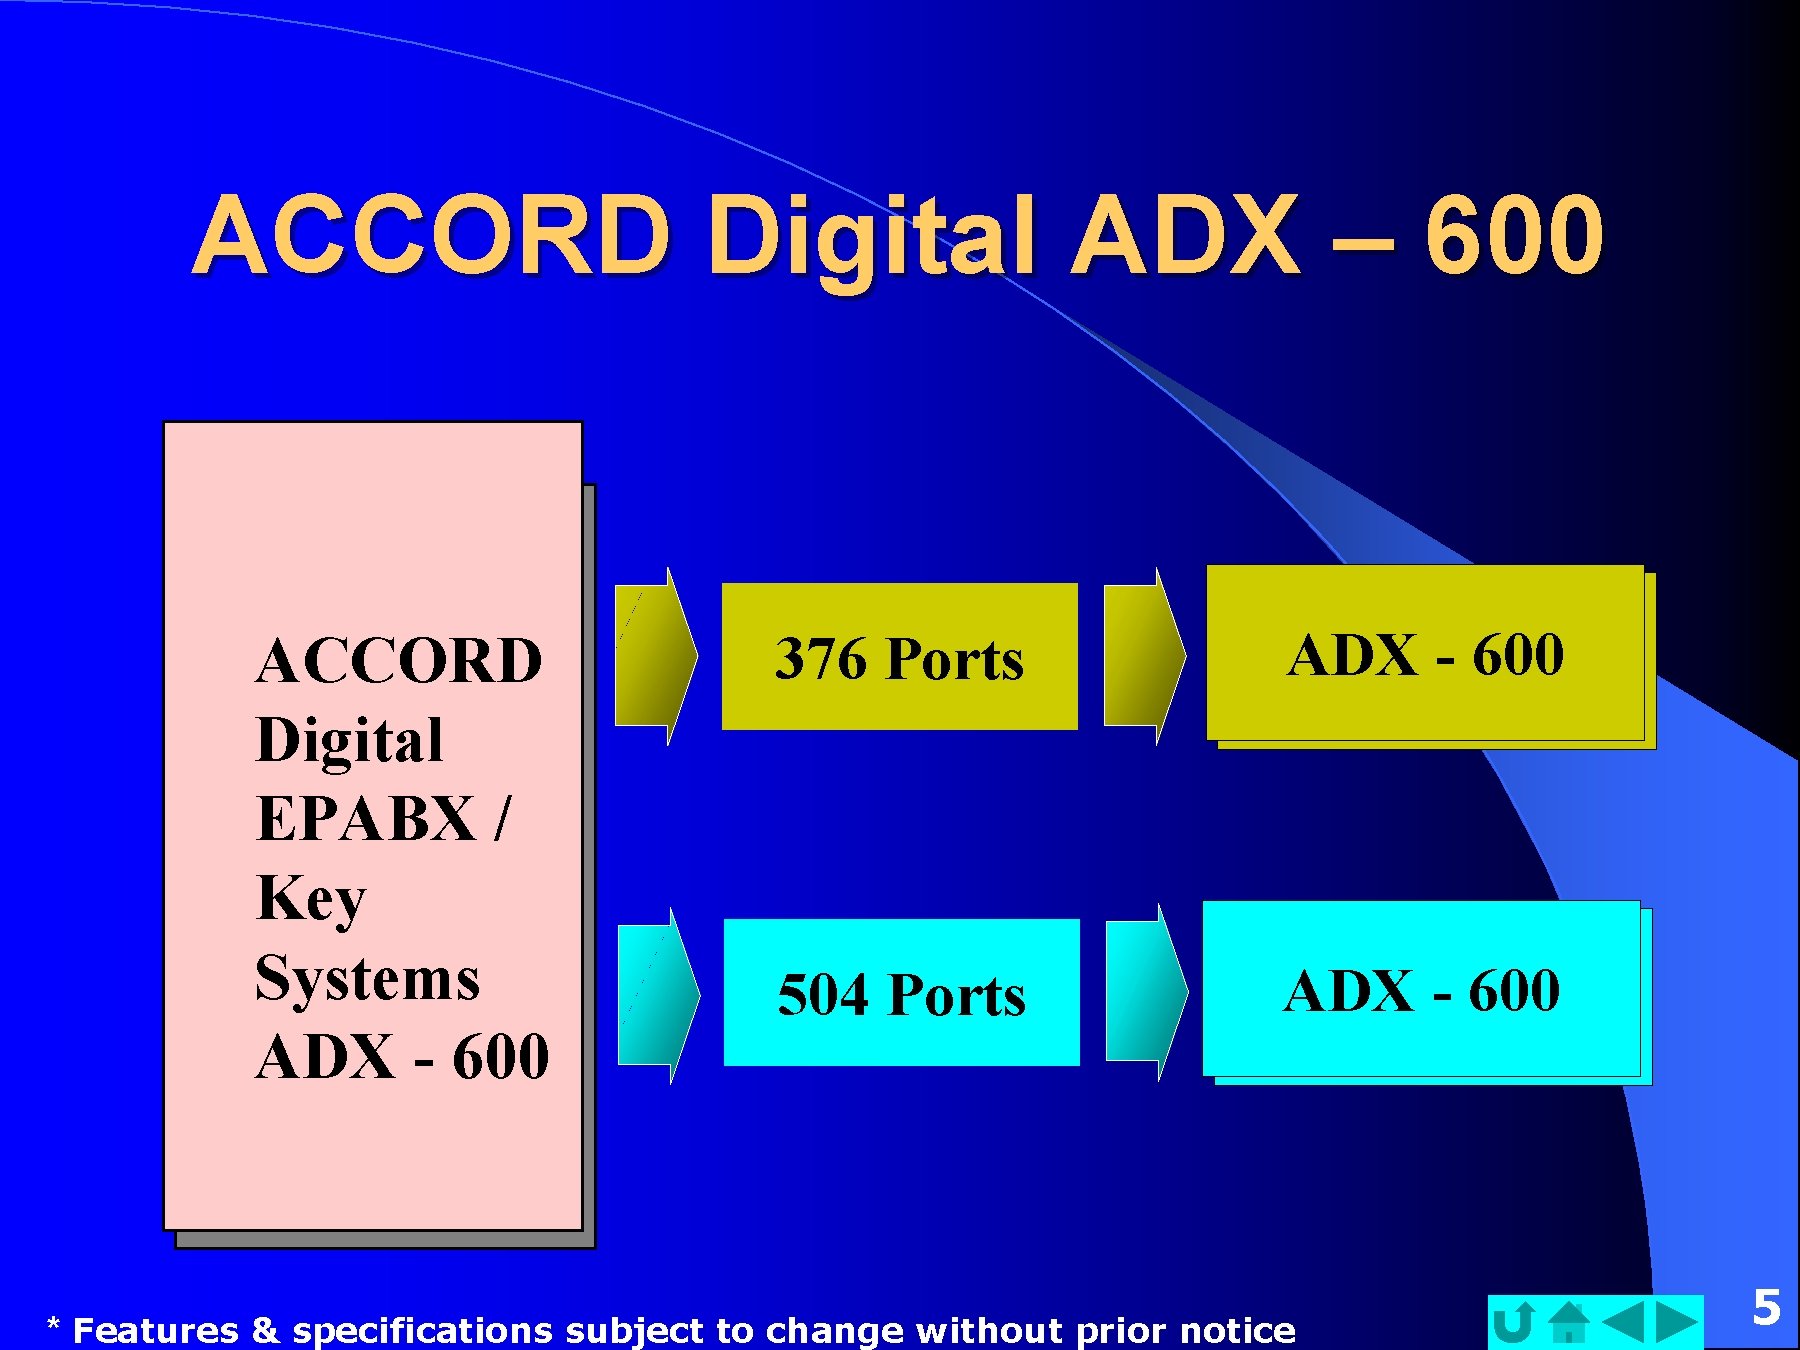 ACCORD Digital ADX – 600 ACCORD Digital EPABX / Key Systems ADX - 600